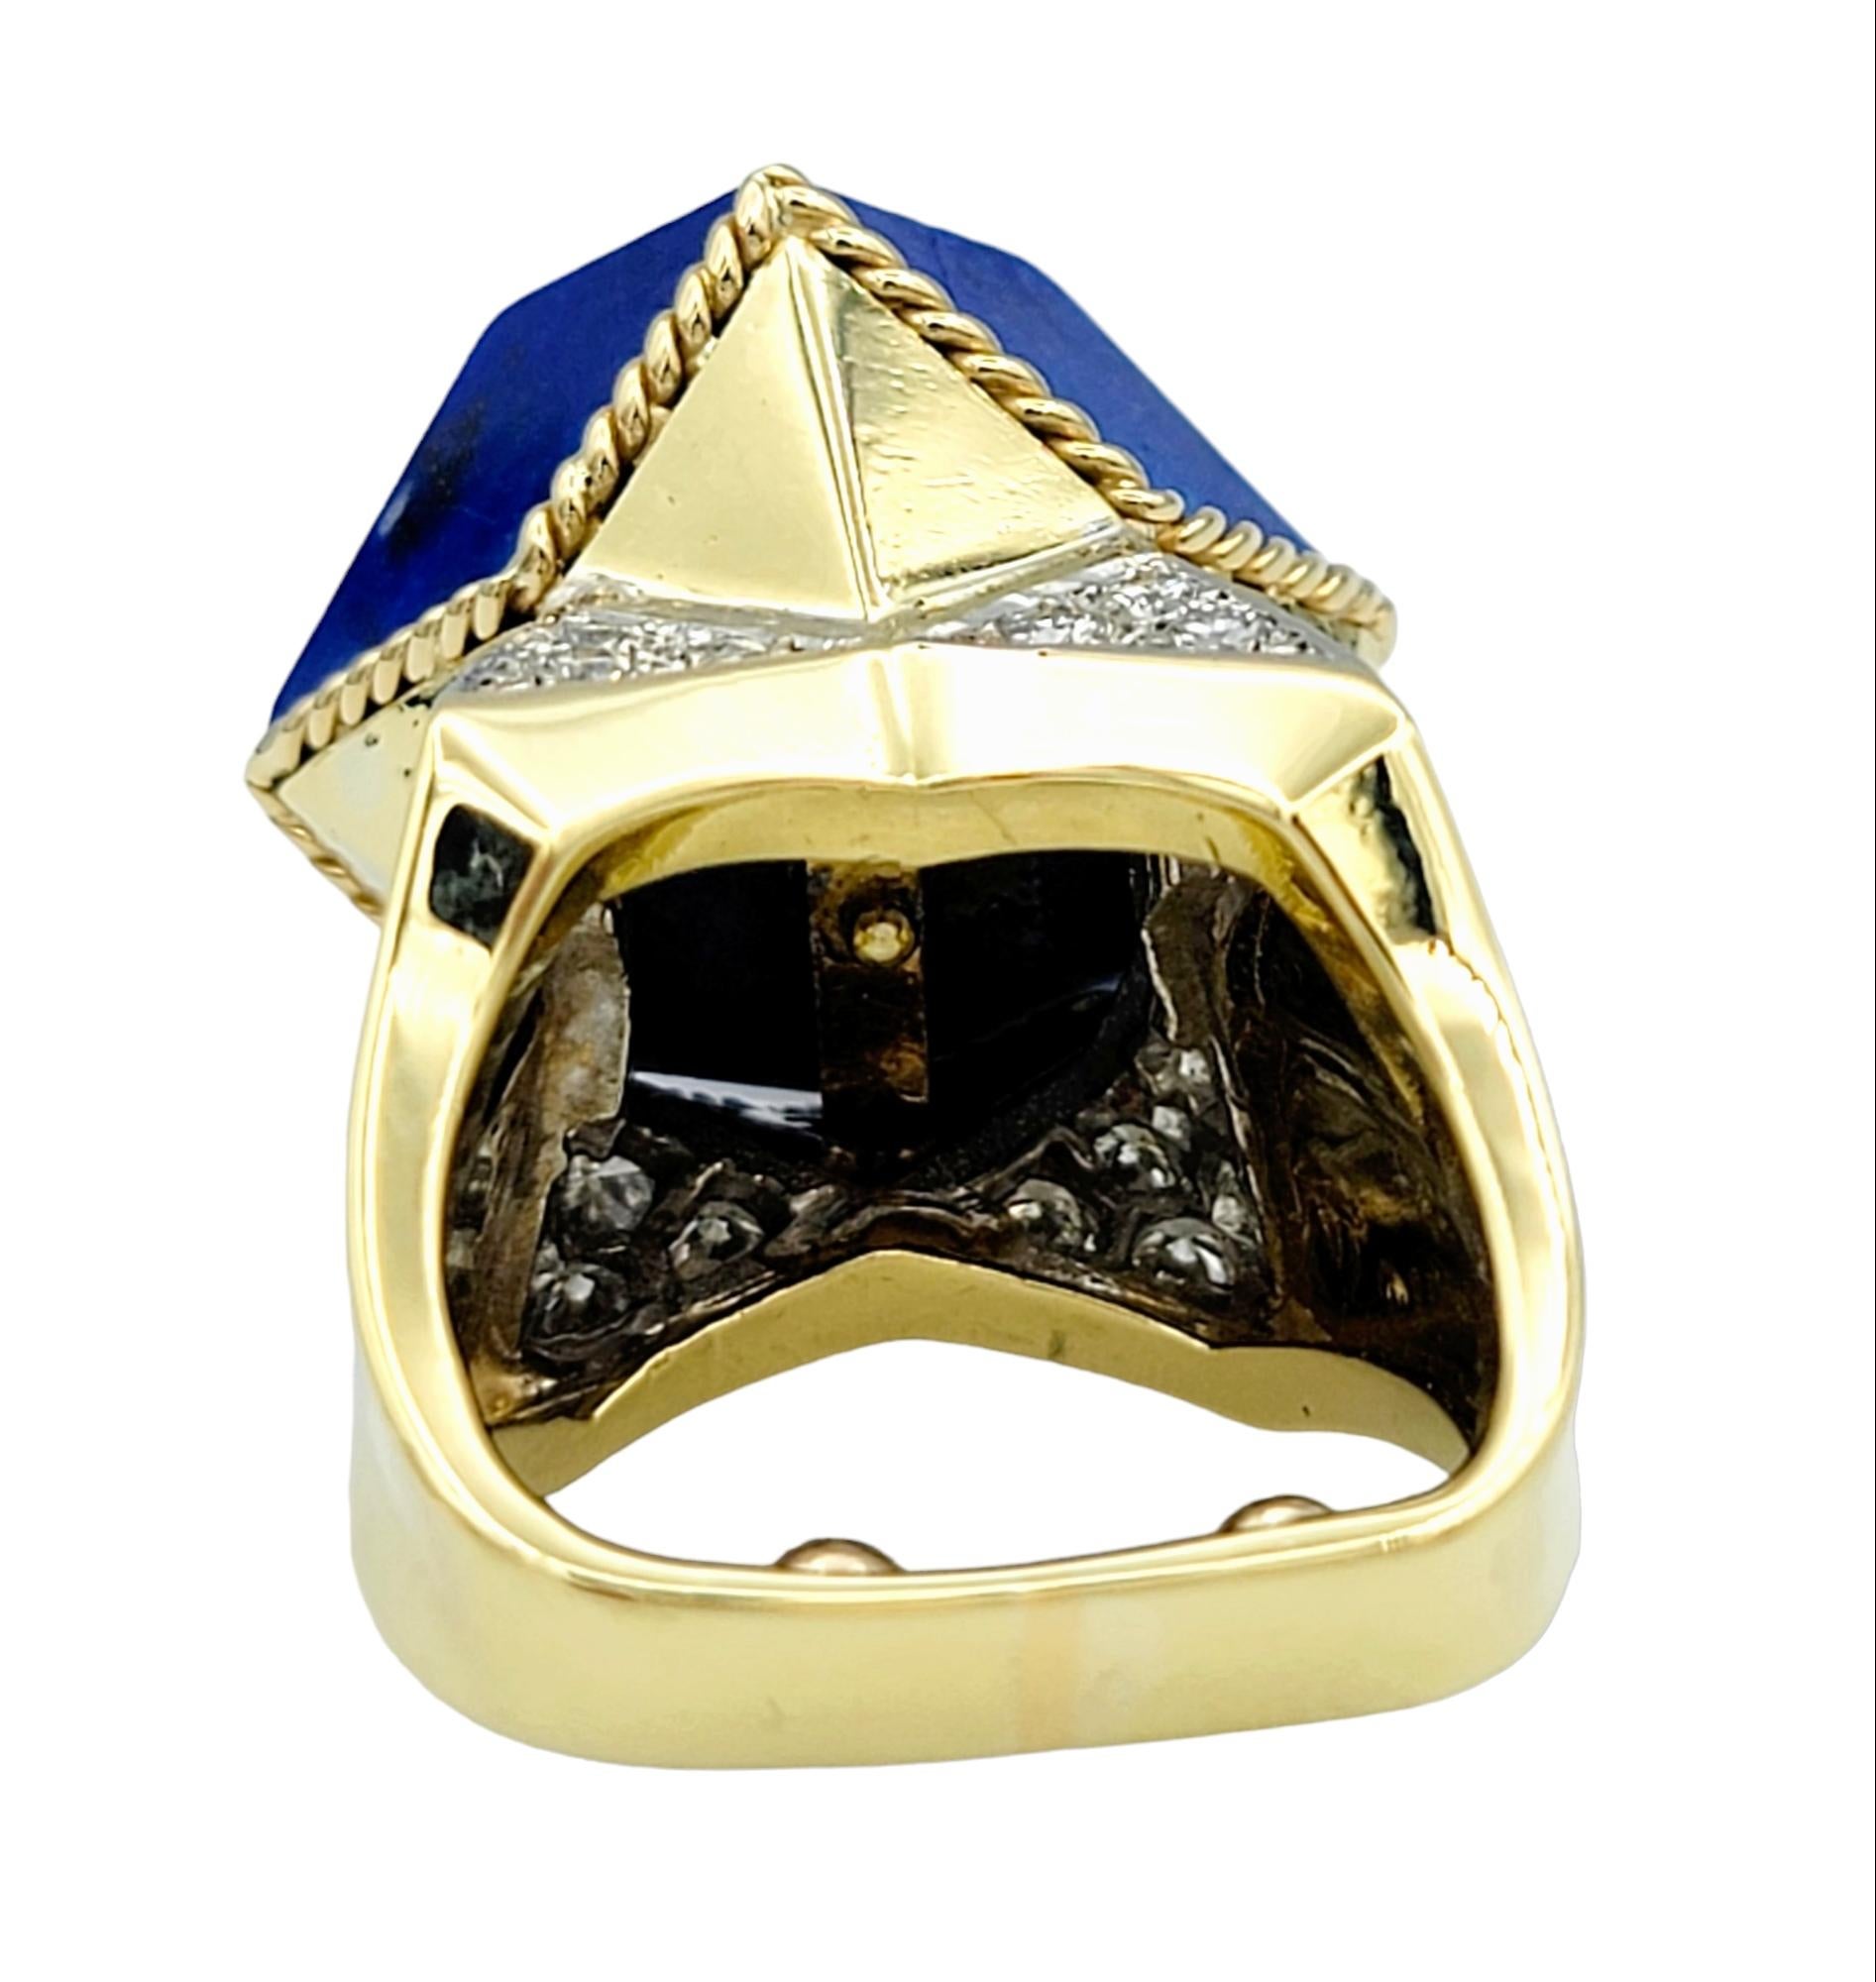 Blue Polygon Lapis Lazuli and Diamond Cocktail Ring Set in 18 Karat Yellow Gold For Sale 2